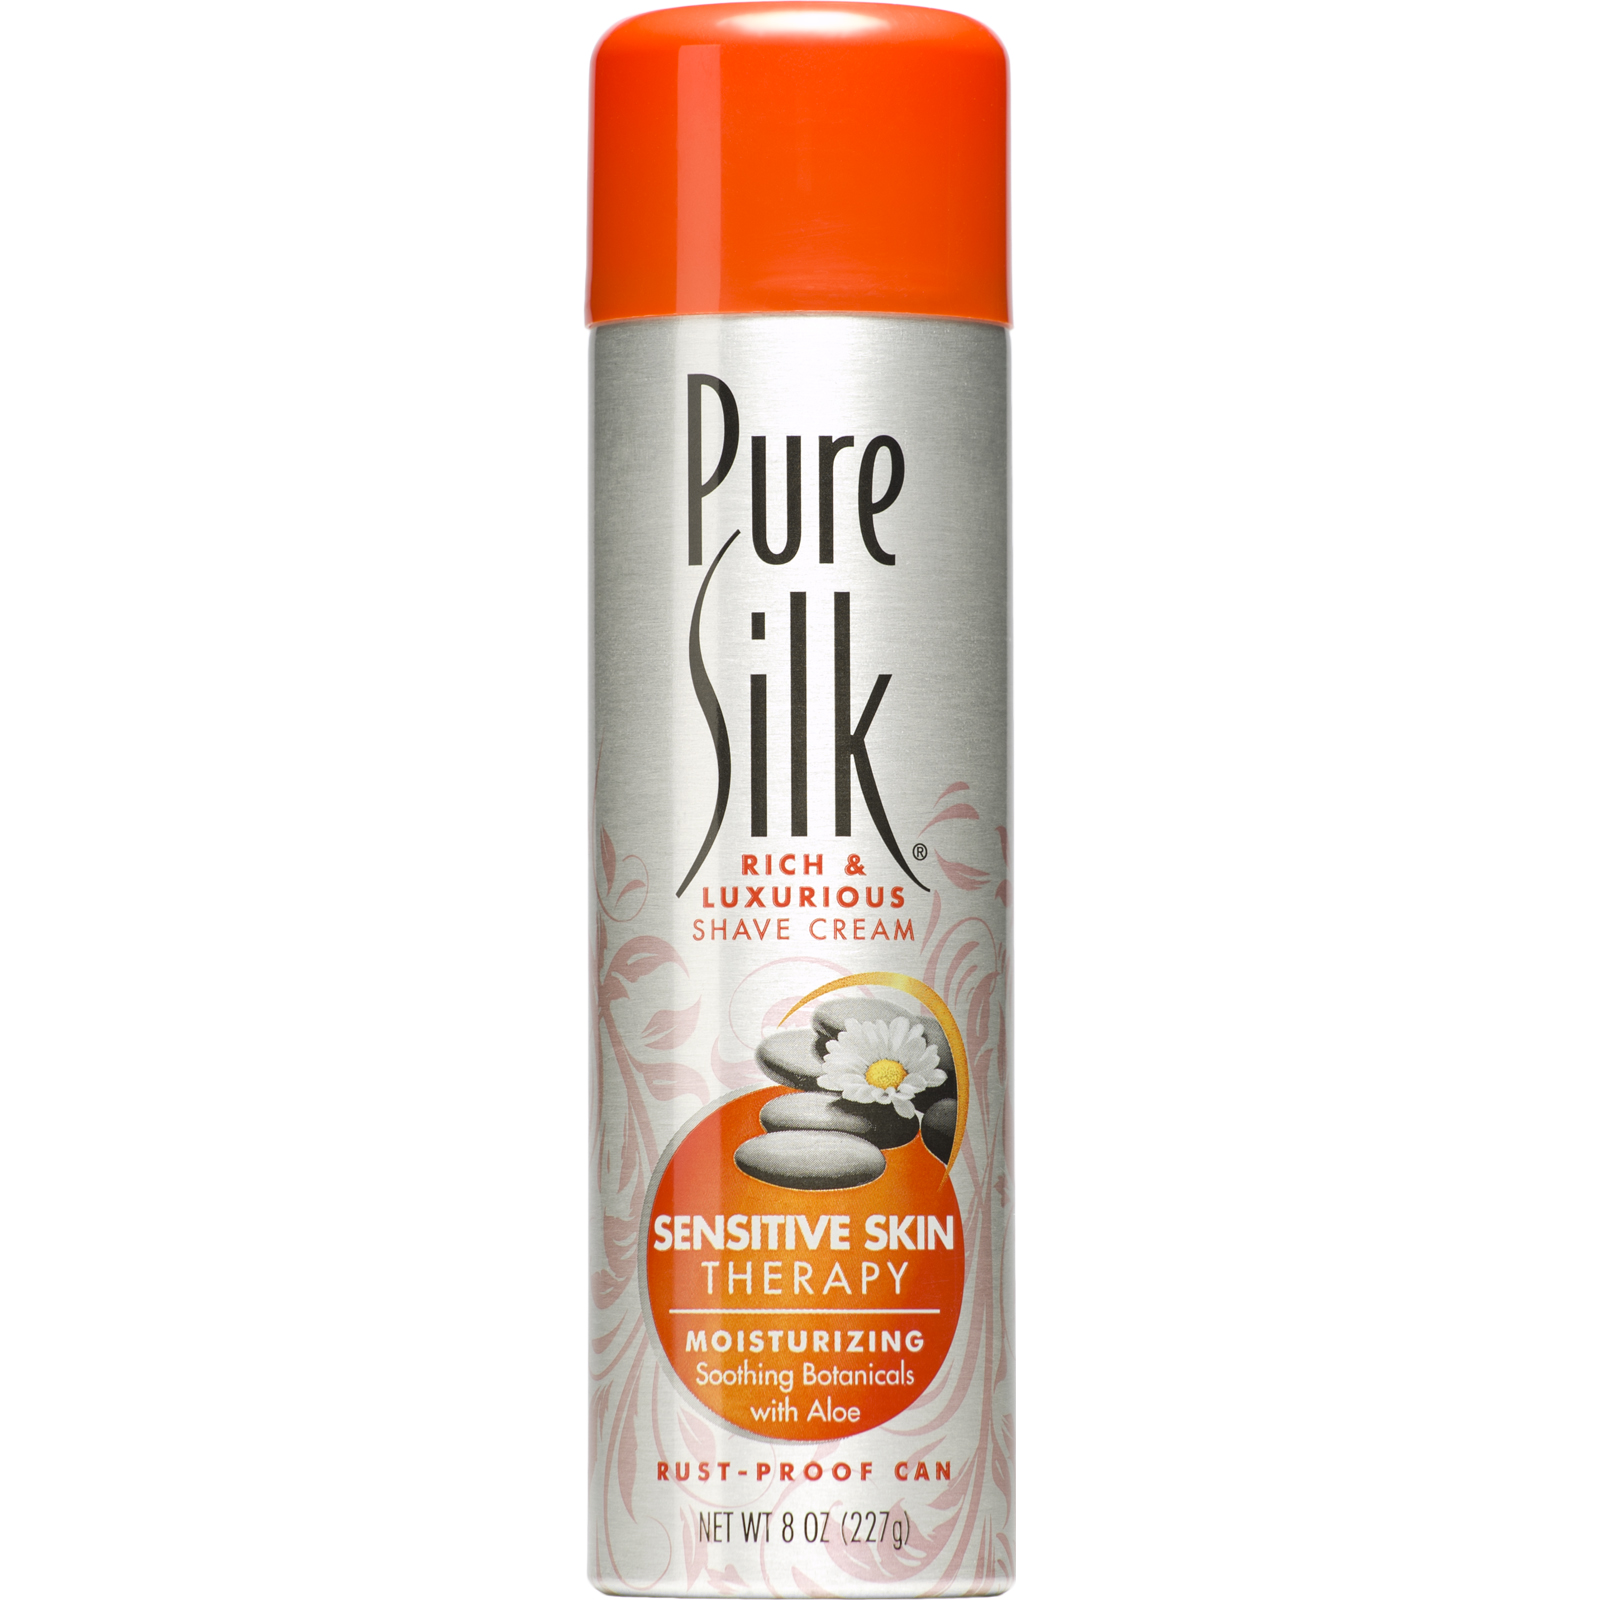 Pure Silk Sensitive Skin Moisturizing Shave Cream with Aloe, 8 oz